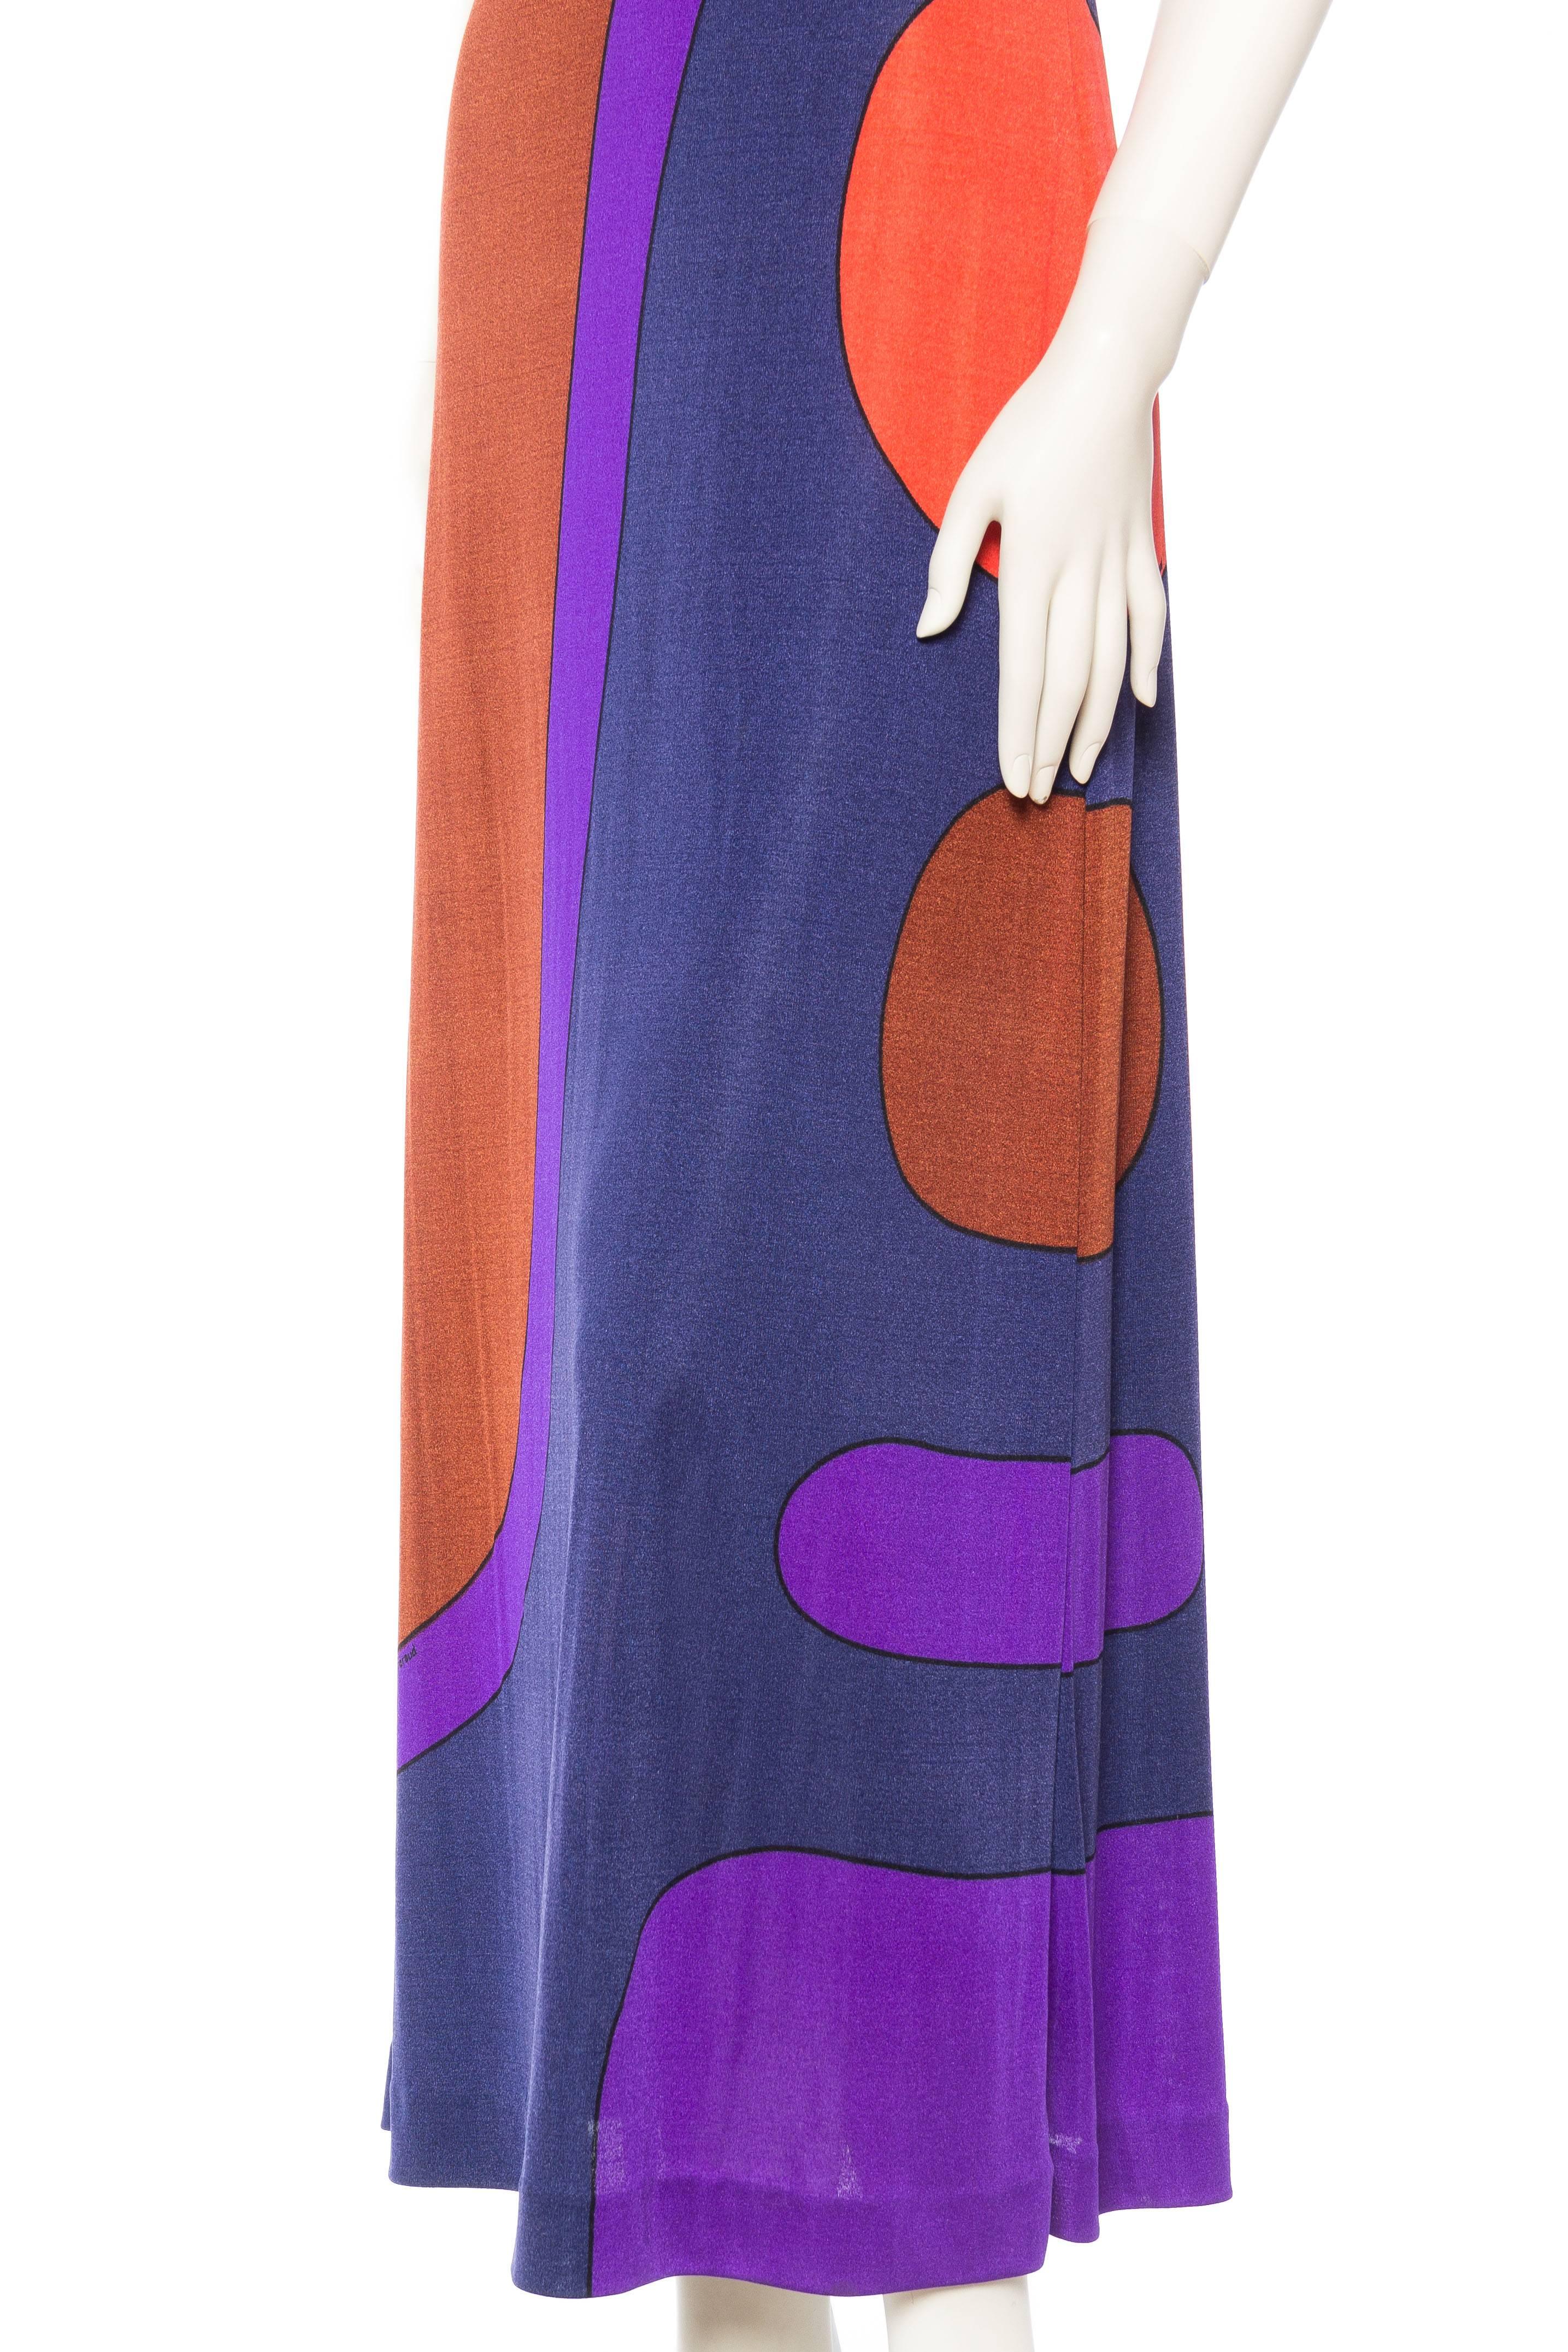 1960S LOUIS FÉRAUD Silk Jersey Large Scale Op-Art Mod Printed Dress 3